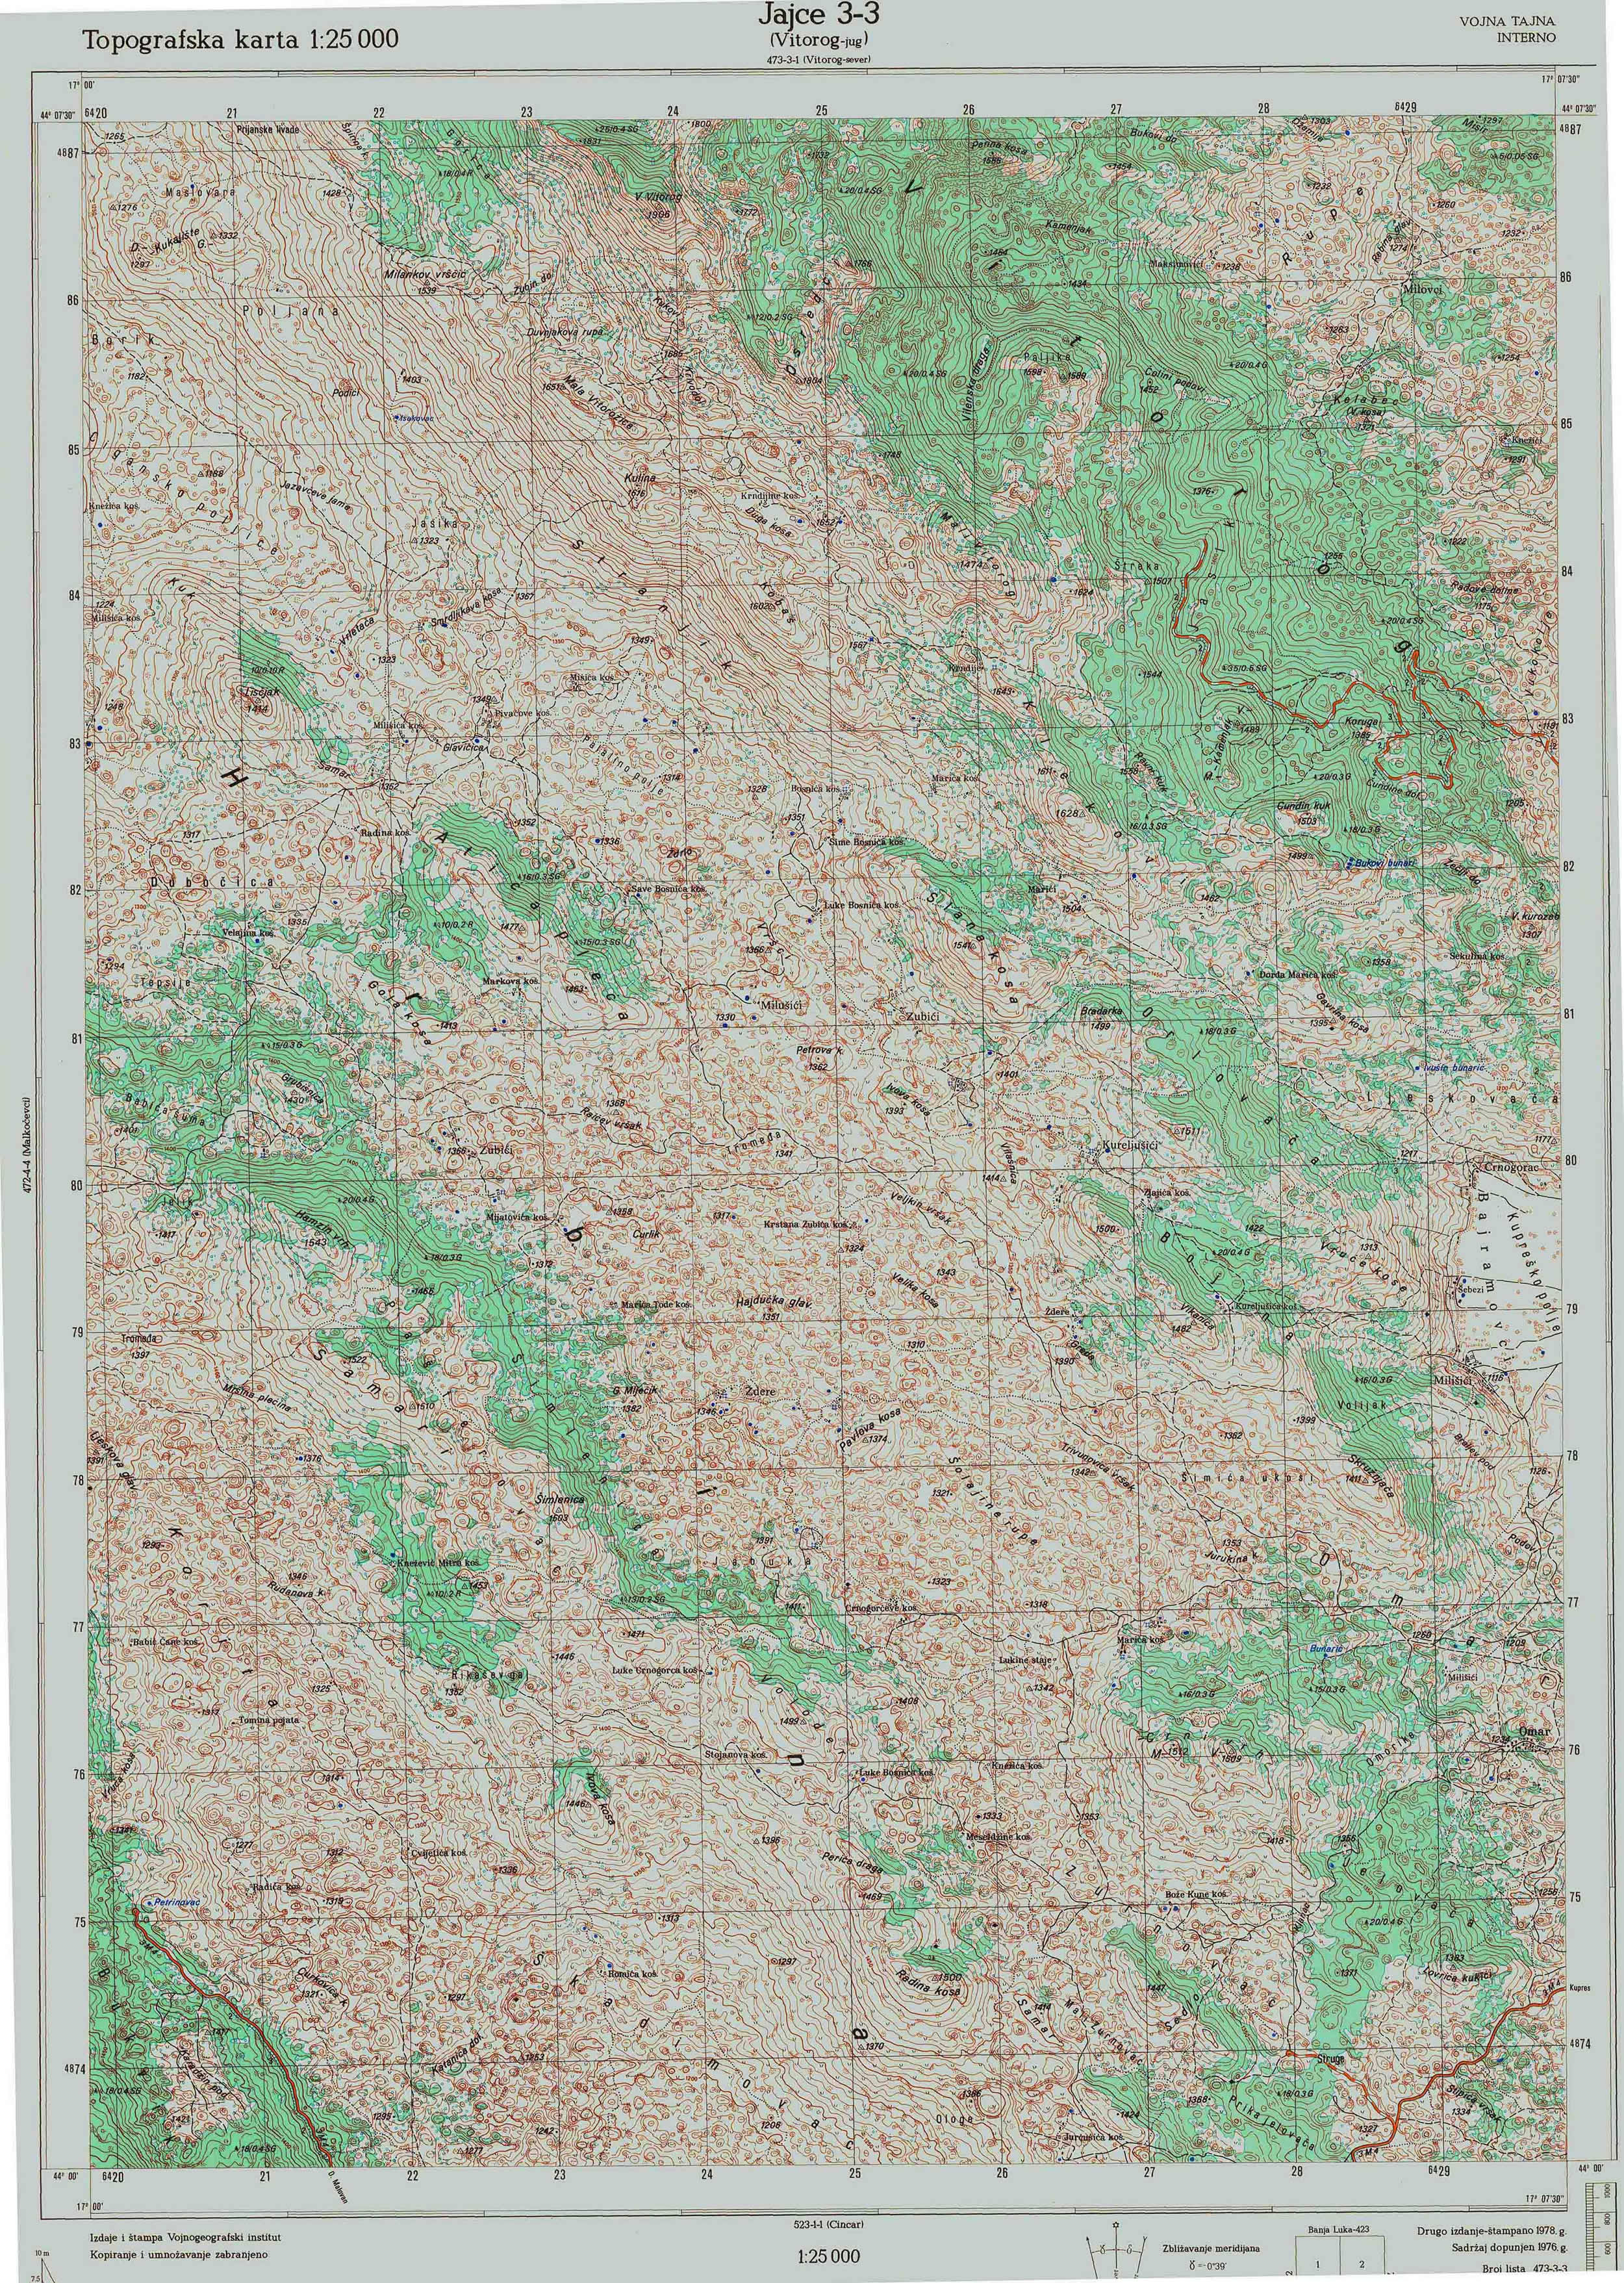  topografska karta Bosne i Hercegovine 25000 JNA  Jajce